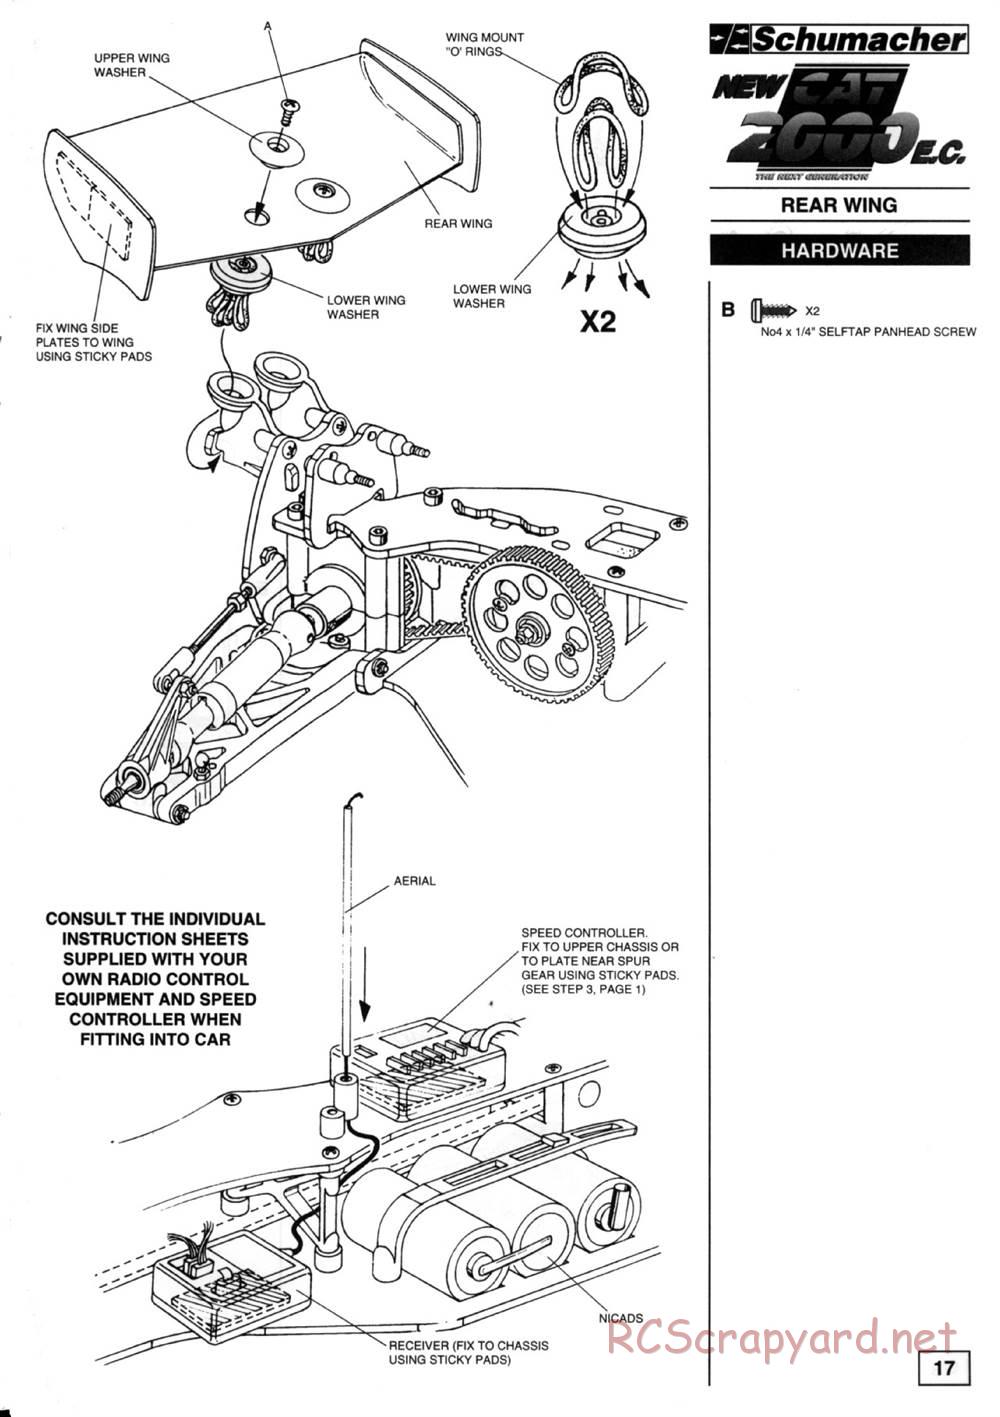 Schumacher - Cat 2000 EC - Manual - Page 23